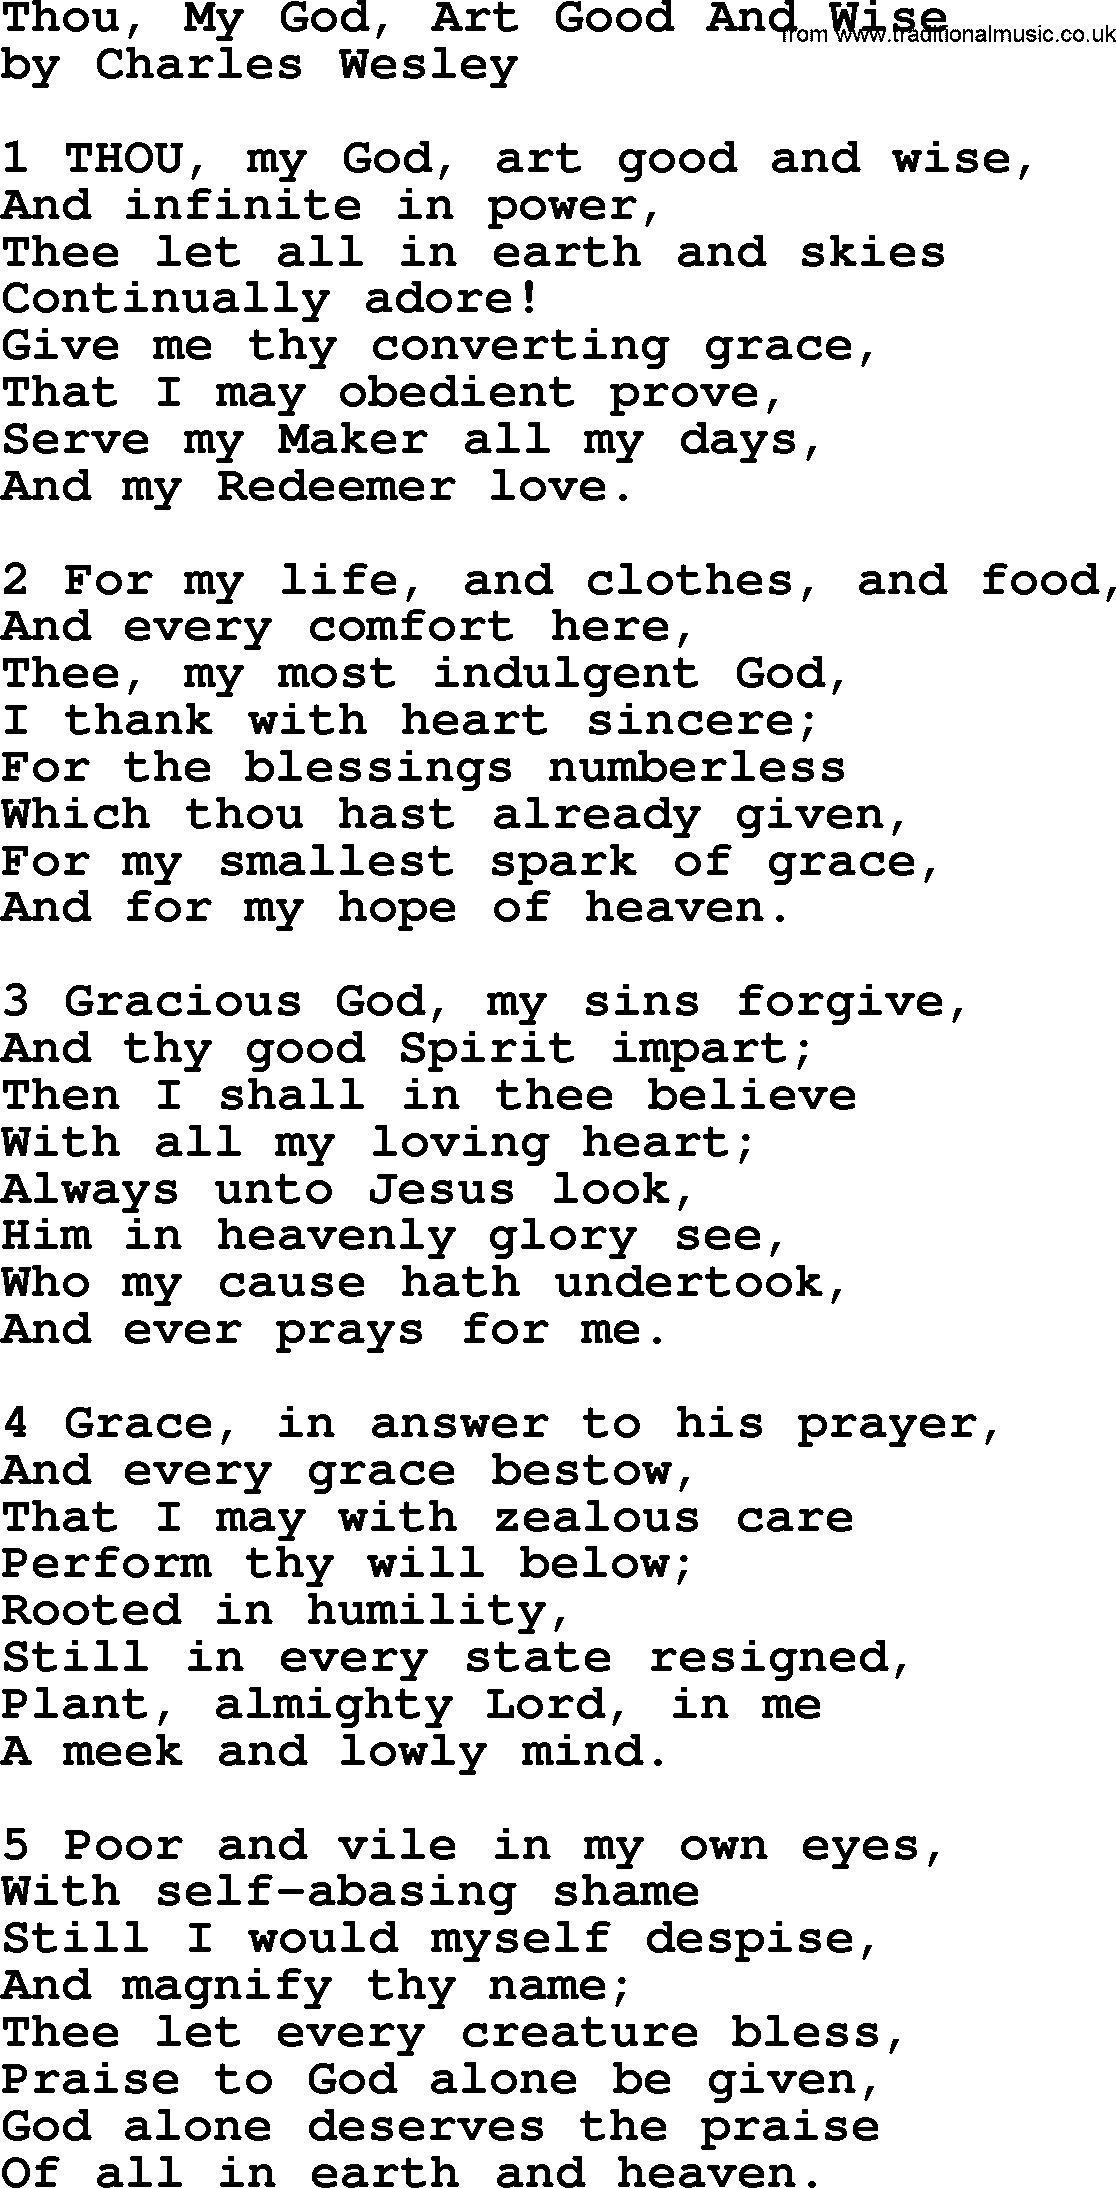 Charles Wesley hymn: Thou, My God, Art Good And Wise, lyrics